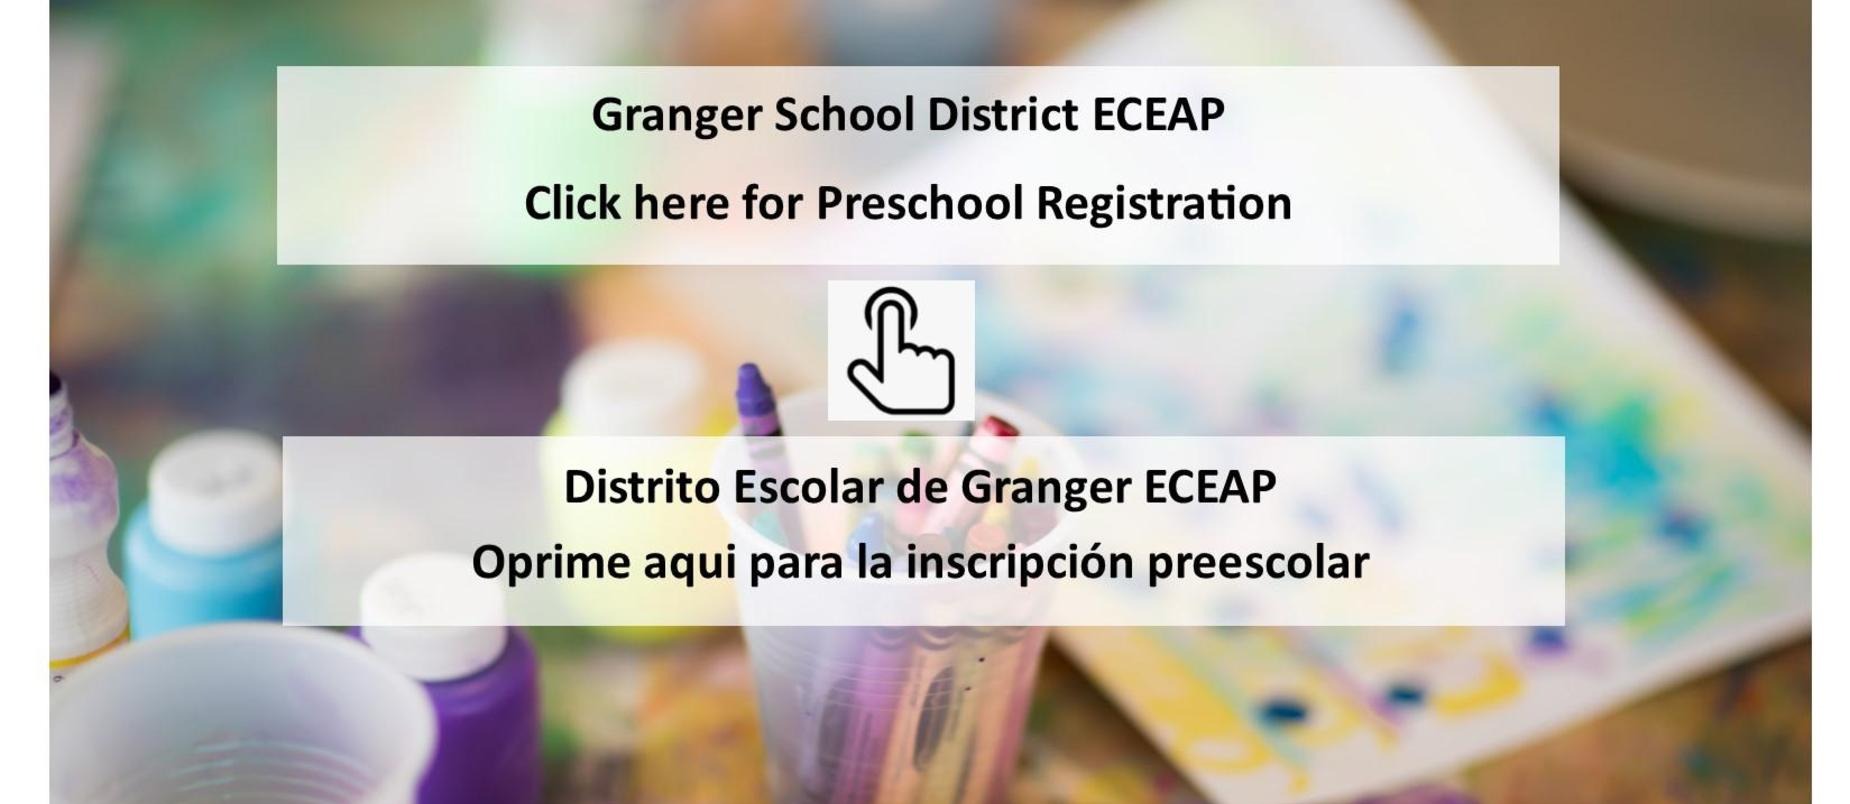 Granger School District ECEAP - Click here for preschool registration